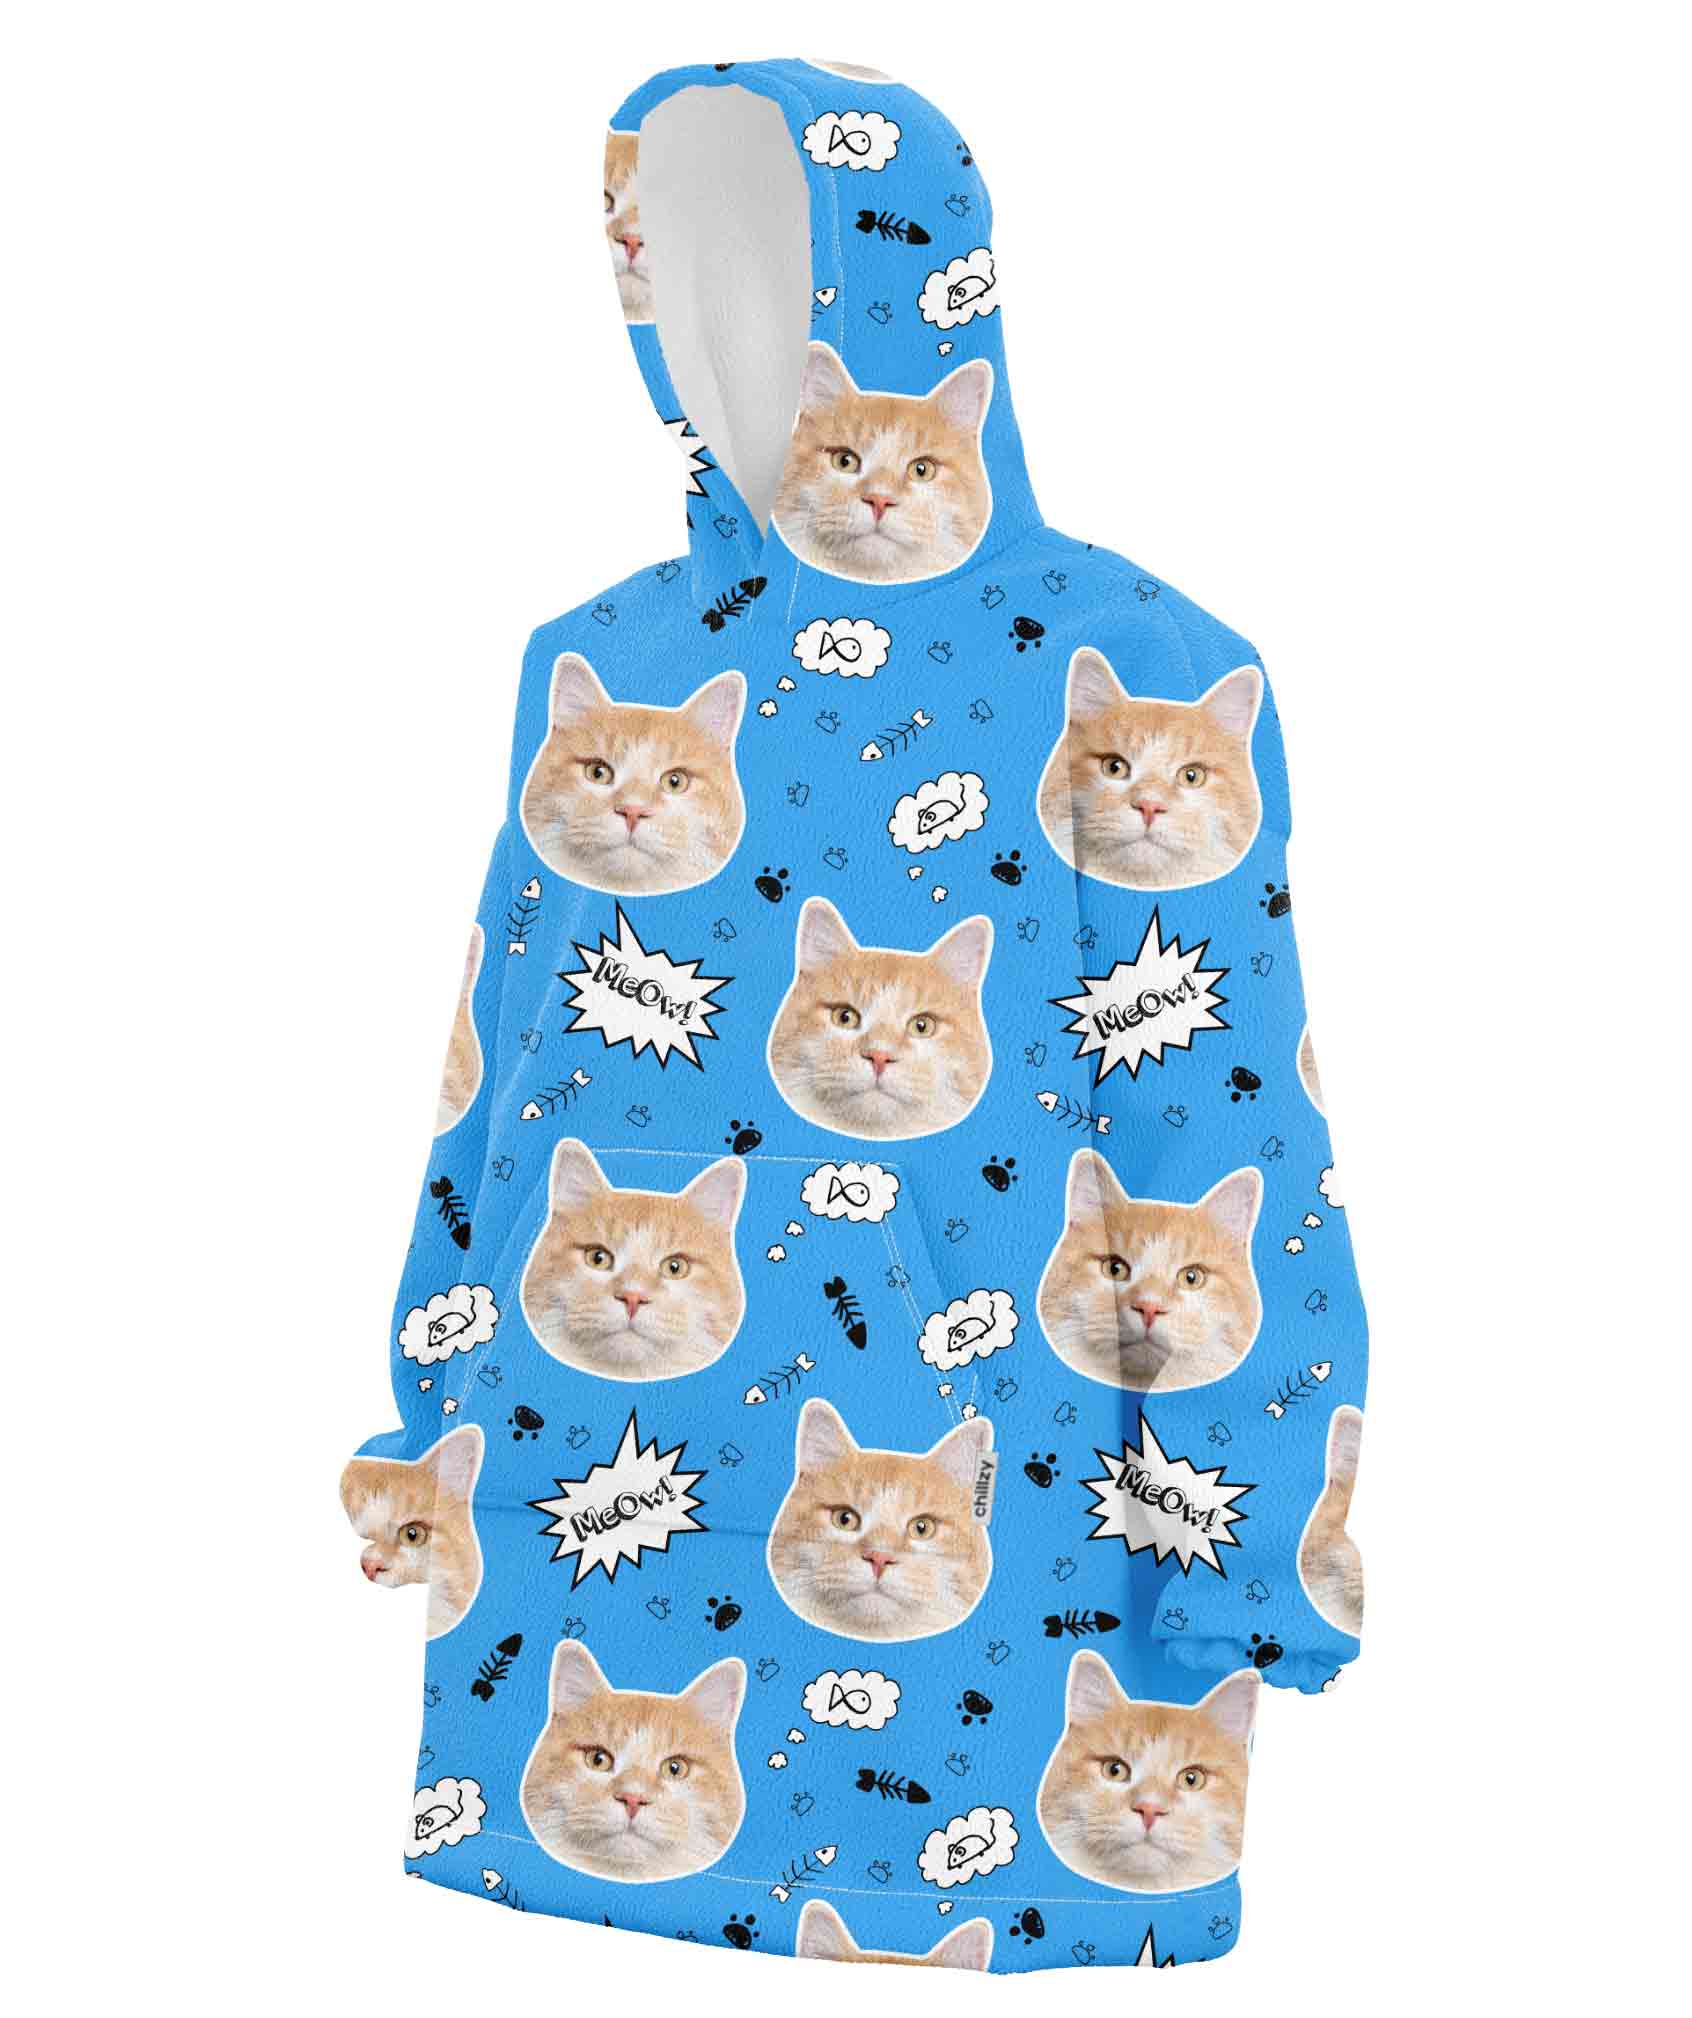 Your Cat Meow Personalised Hoodie Blanket